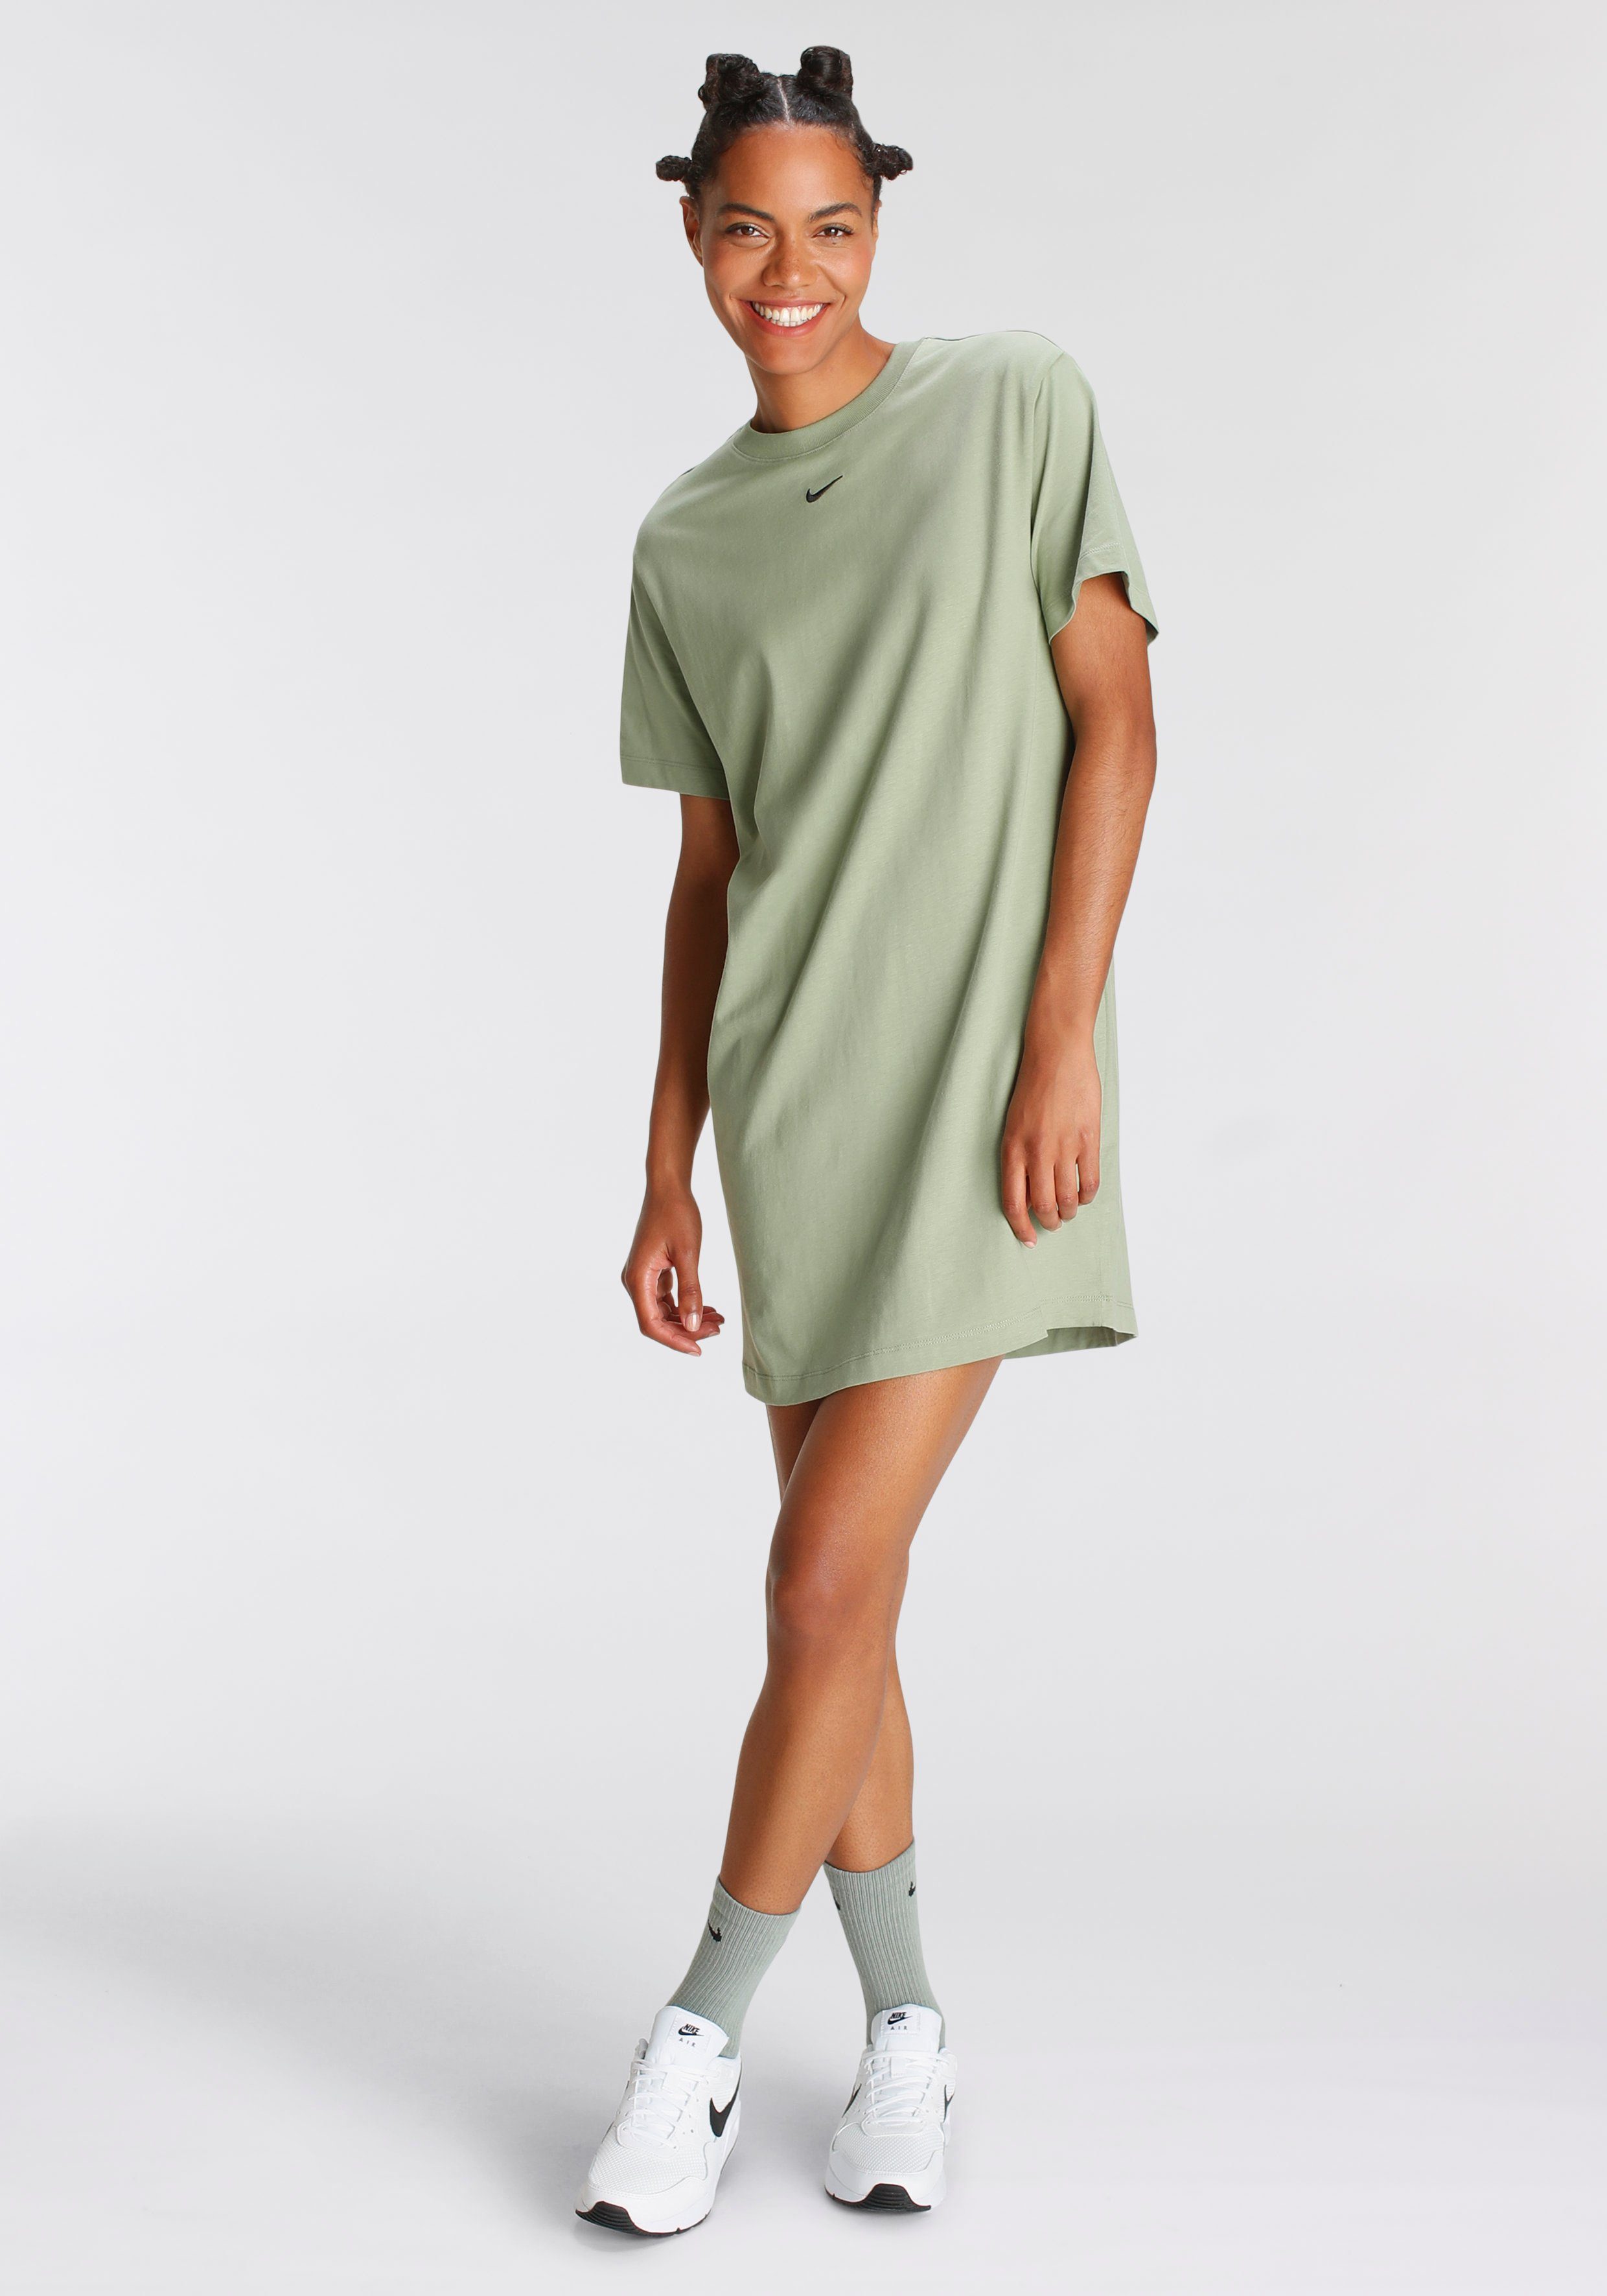 SHORT-SLEEVE Sommerkleid OIL WOMEN'S ESSENTIAL GREEN/BLACK Nike DRESS Sportswear